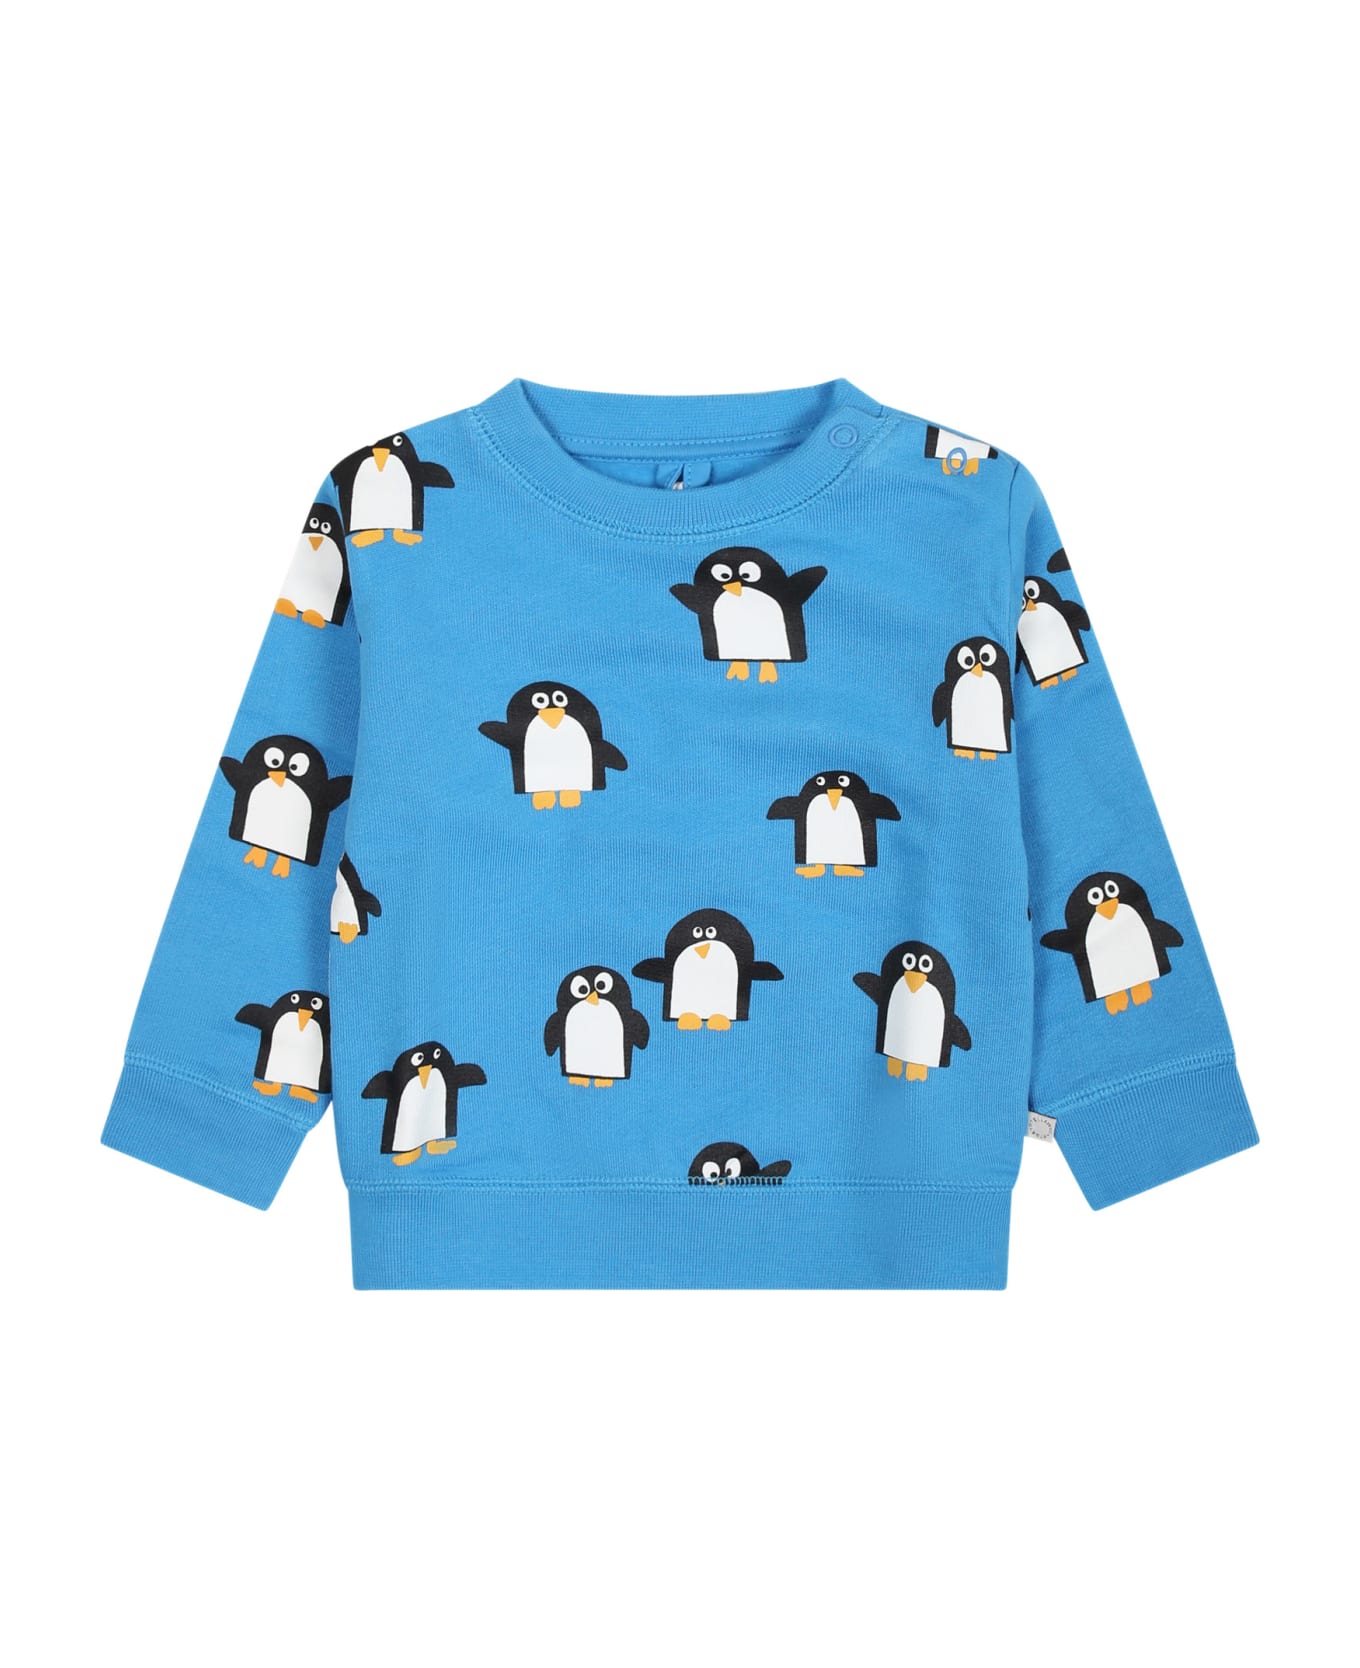 Stella McCartney Kids Light Blue Sweatshirt For Baby Boy With All-over Penguins - Light Blue